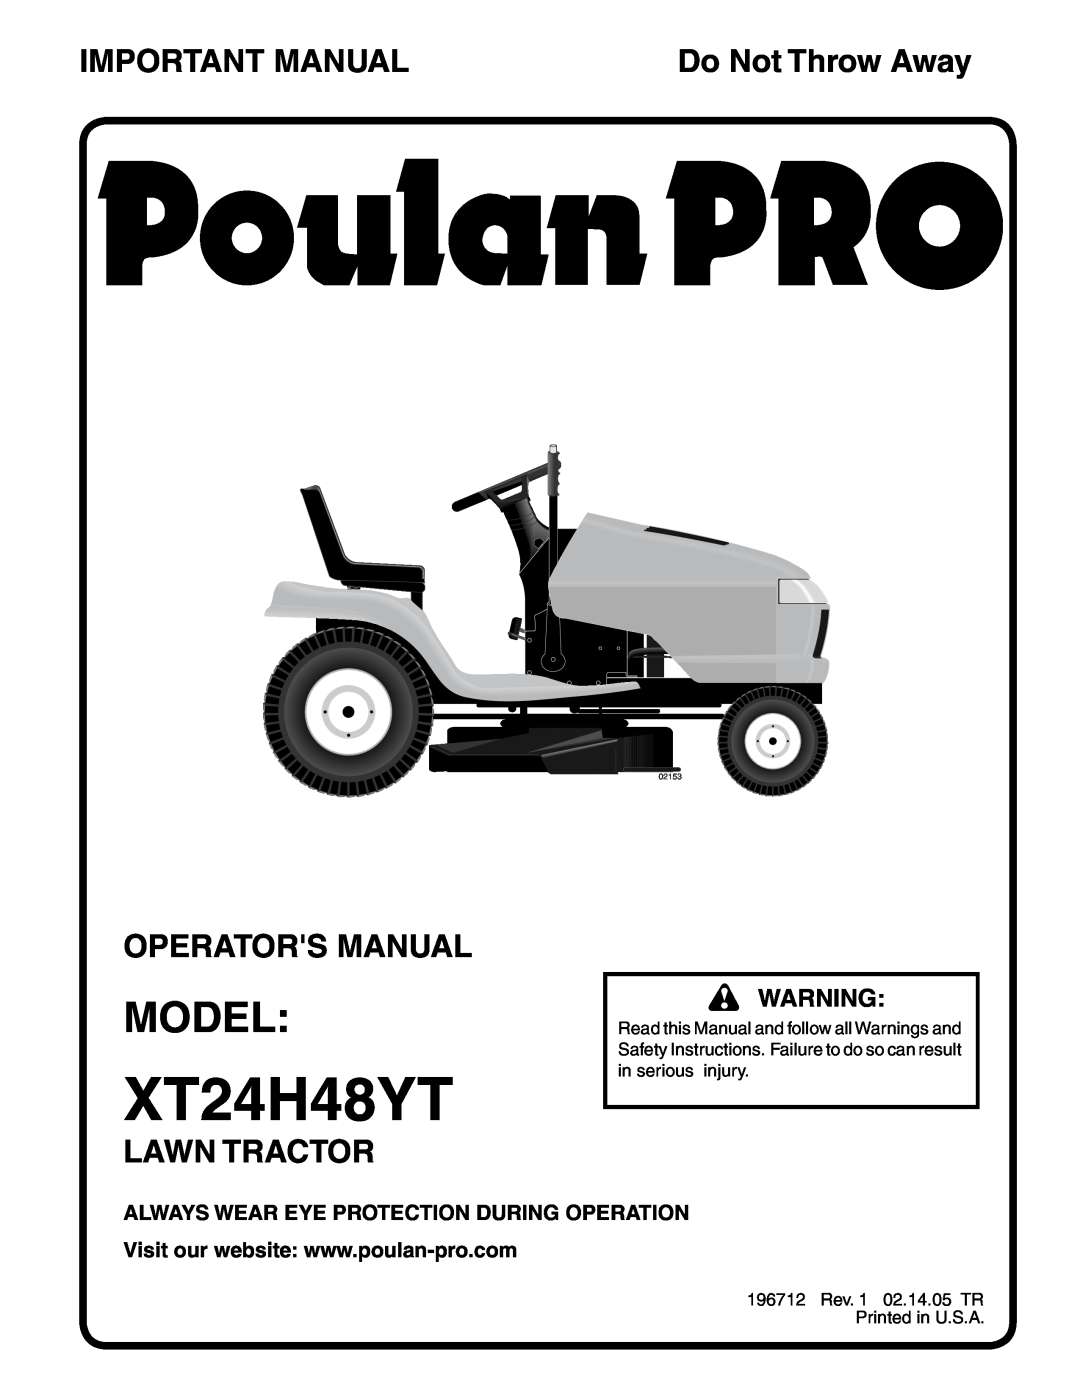 Poulan XT24H48YT manual Model, Important Manual, Operators Manual, Lawn Tractor, Do Not Throw Away, 02153 